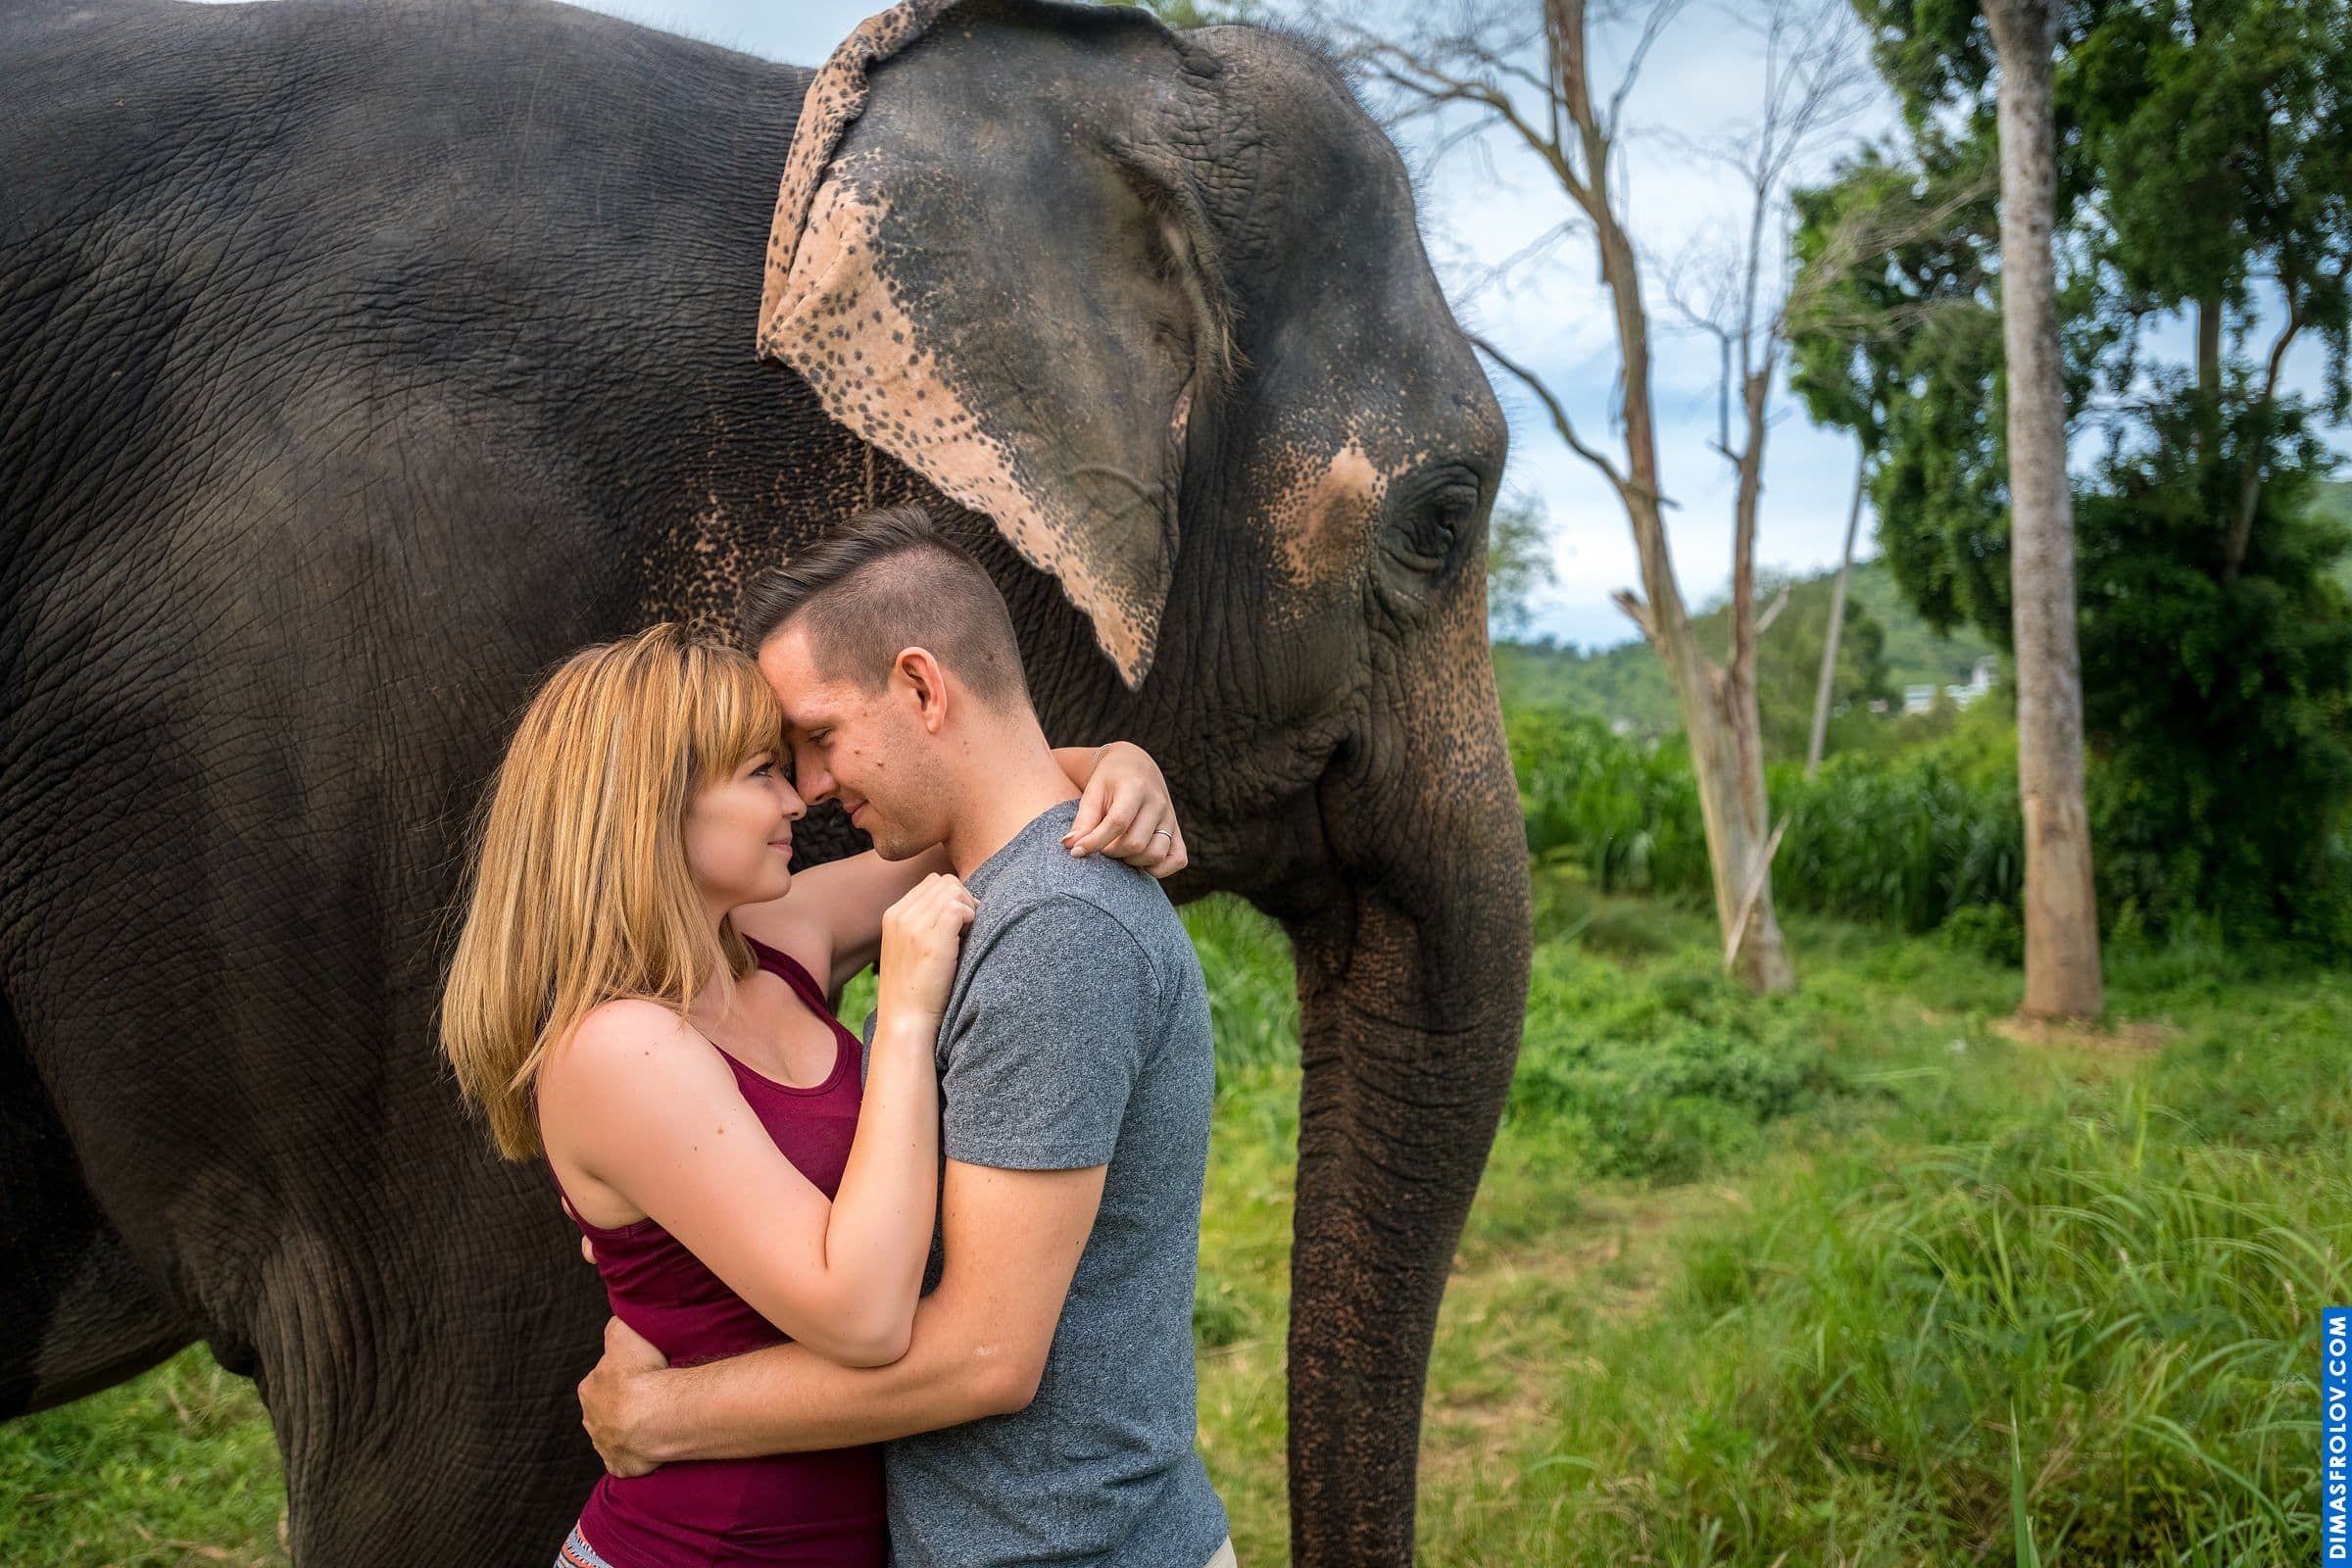 Photo shoot with an elephant on Koh Samui. photographer Dimas Frolov. photo1738